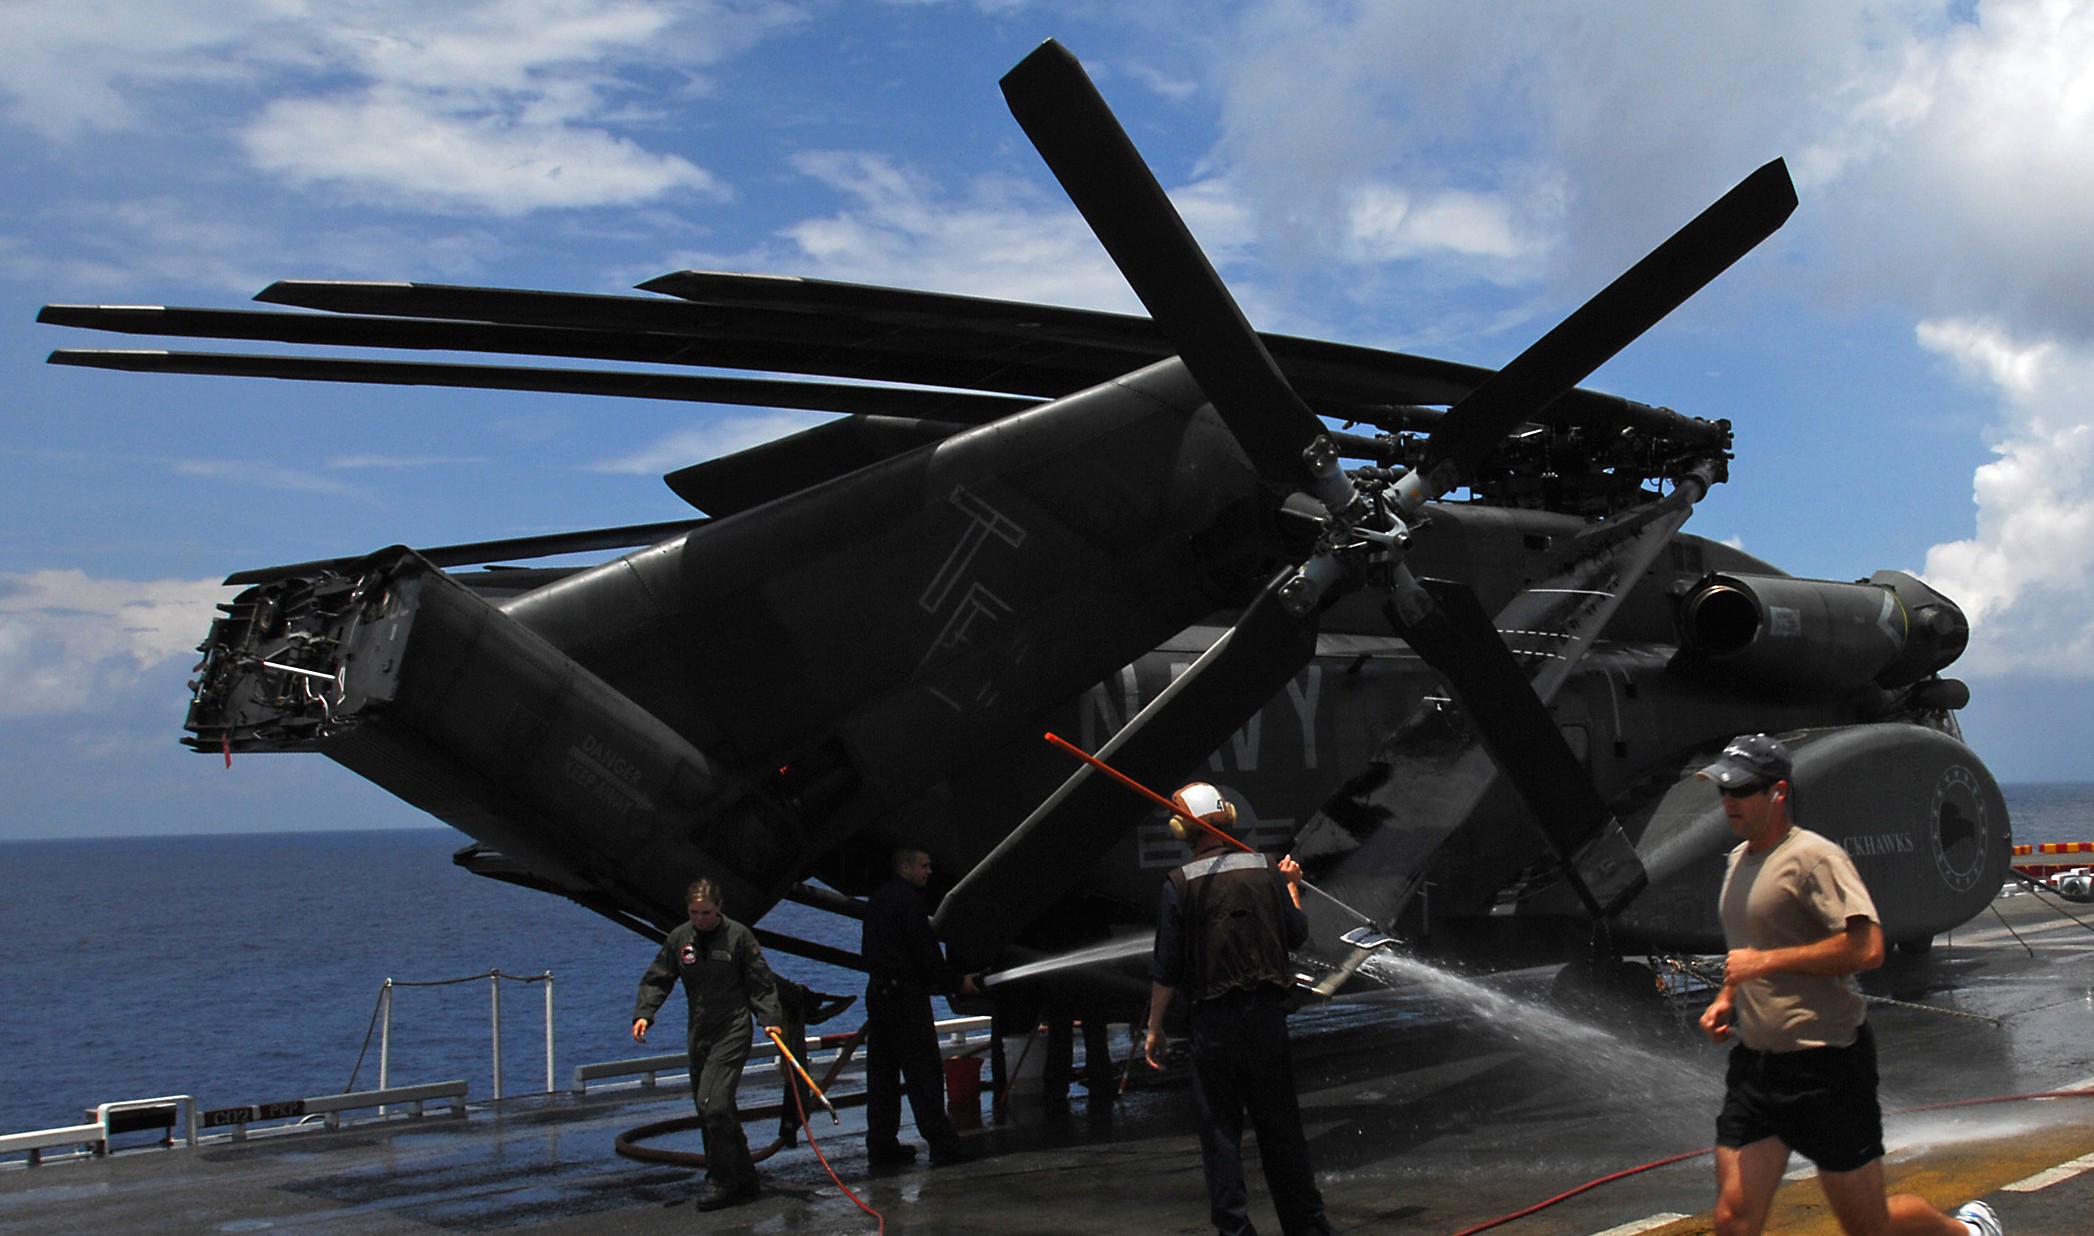 hm-15 blackhawks helicopter mine countermeasures squadron navy mh-53e sea dragon 70 uss tarawa lha-1